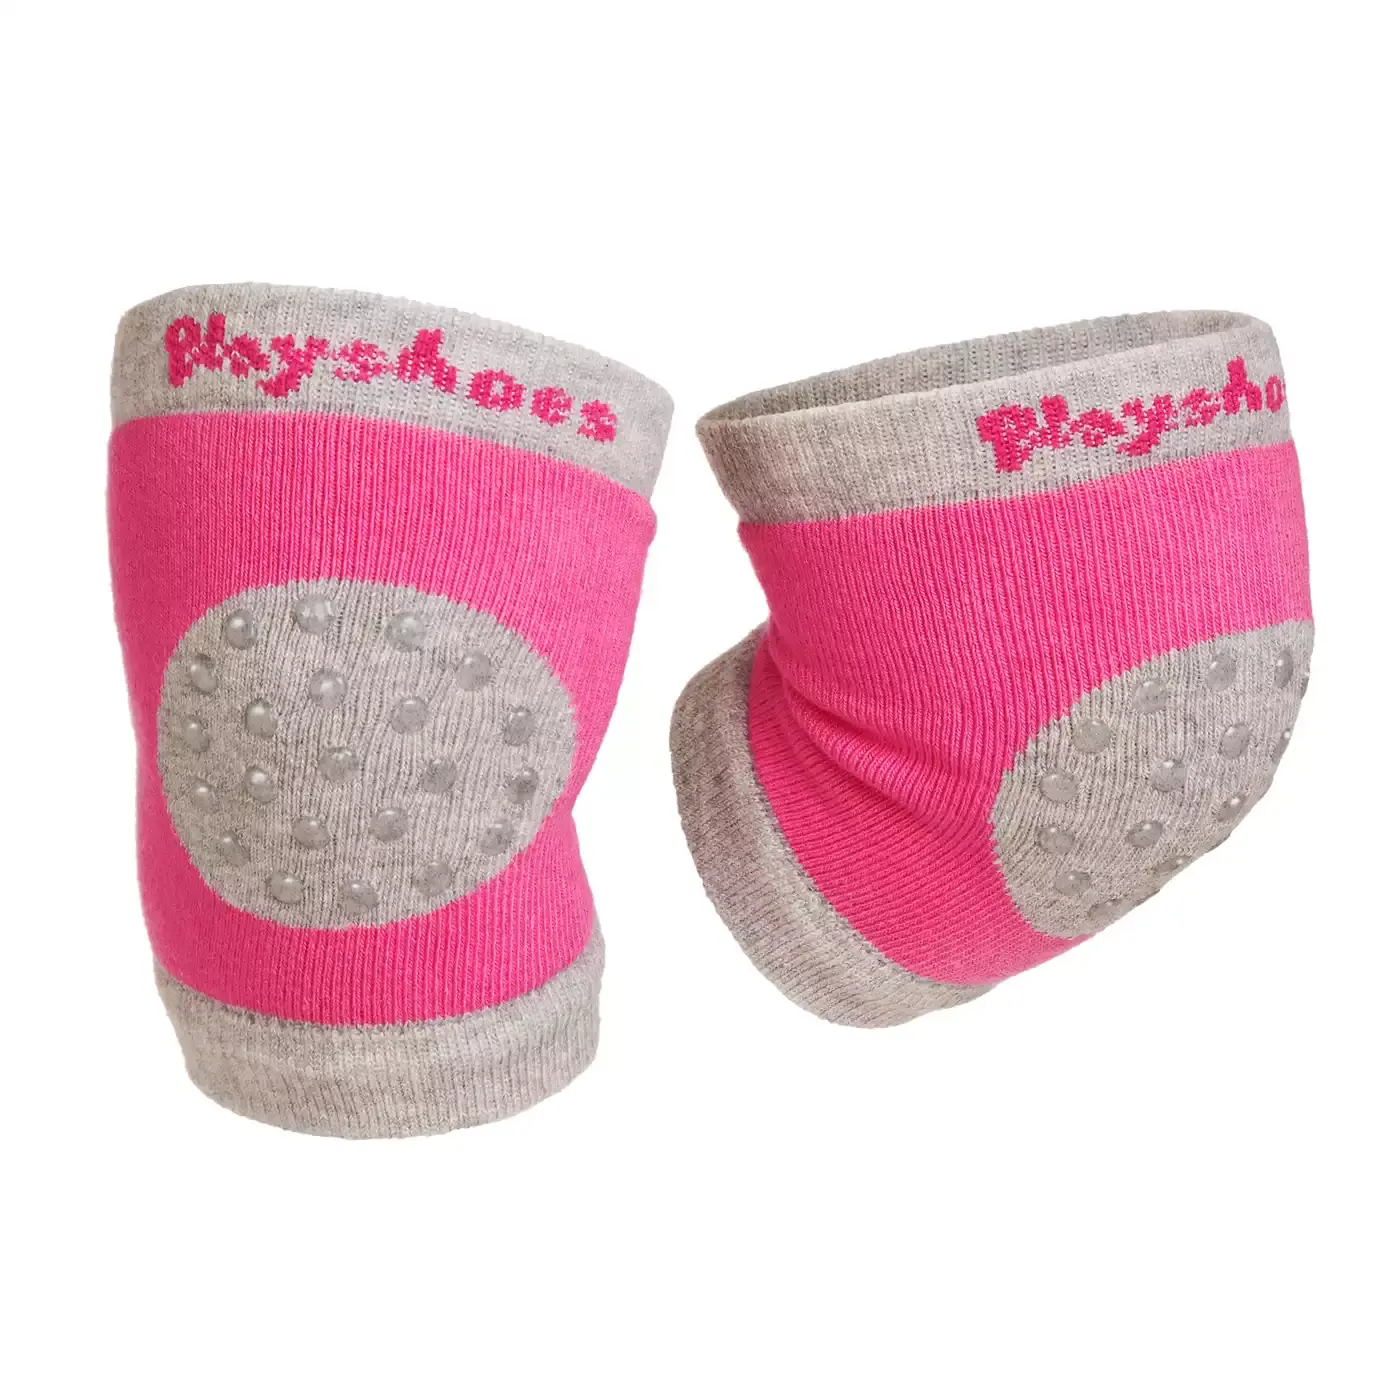 Knieschoner Playshoes Pink Rosa 2019579004003 3